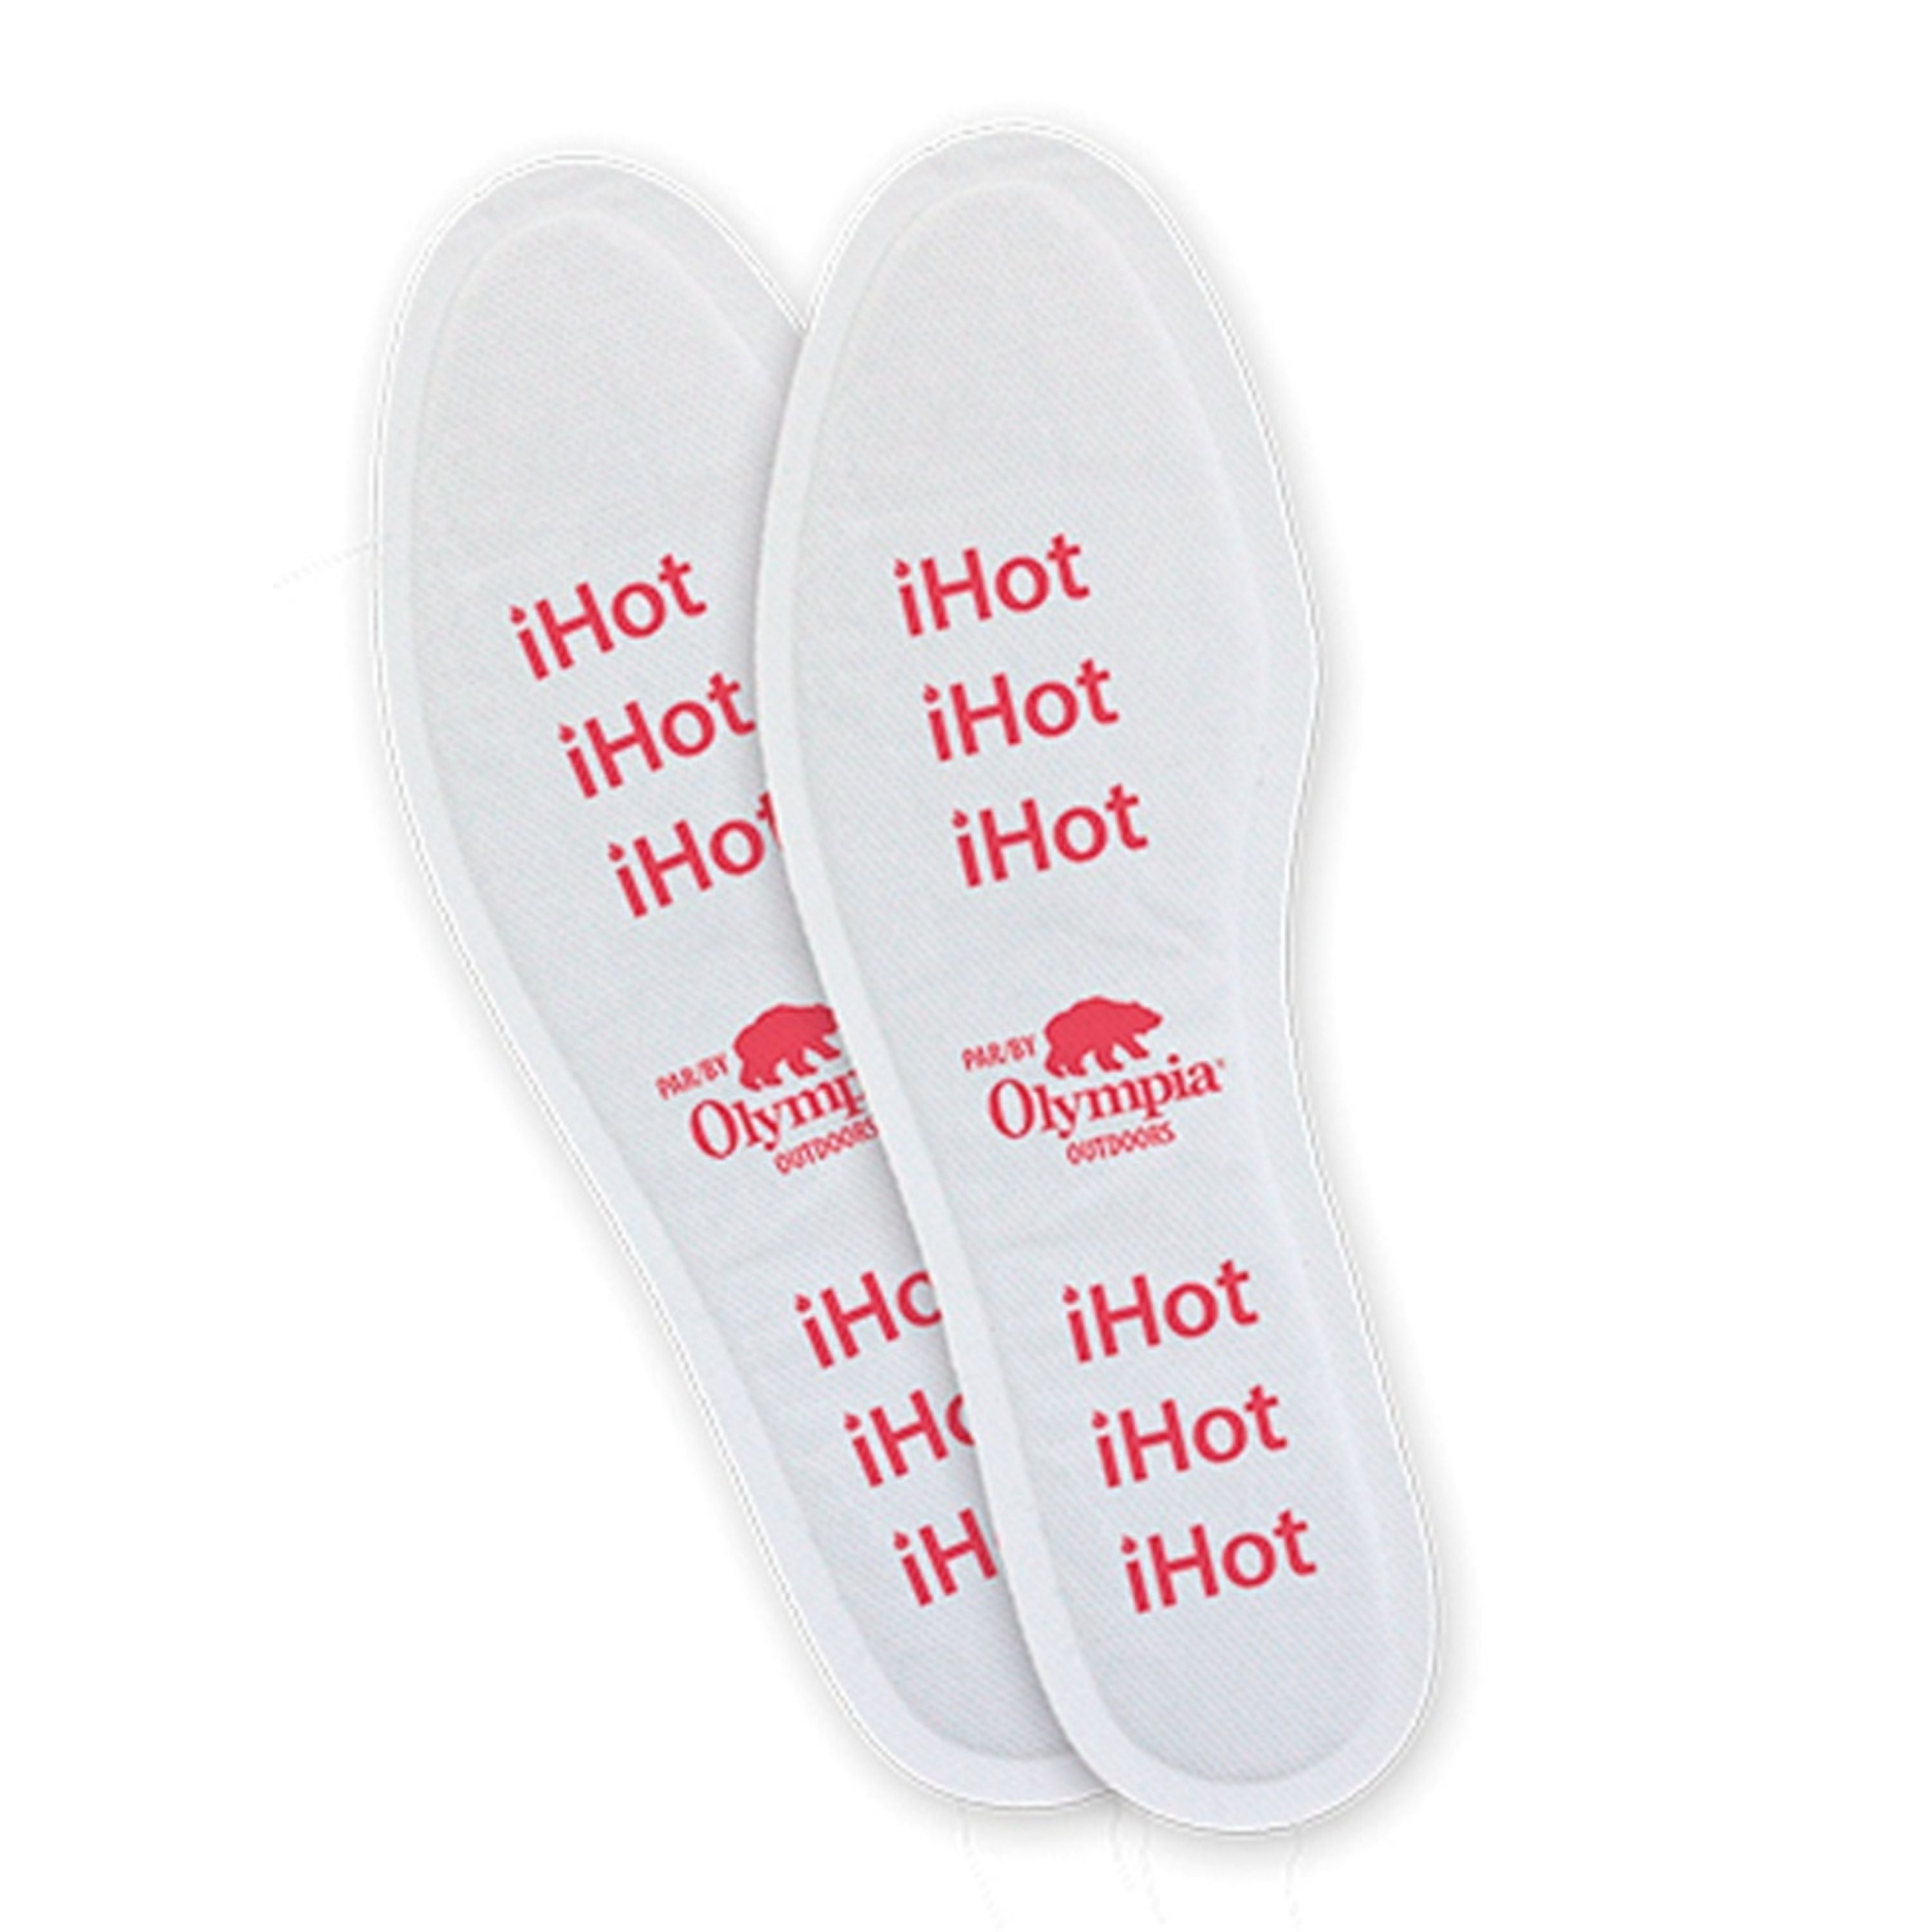 "ihot" Insole foot warmers - 2 soles/pkg